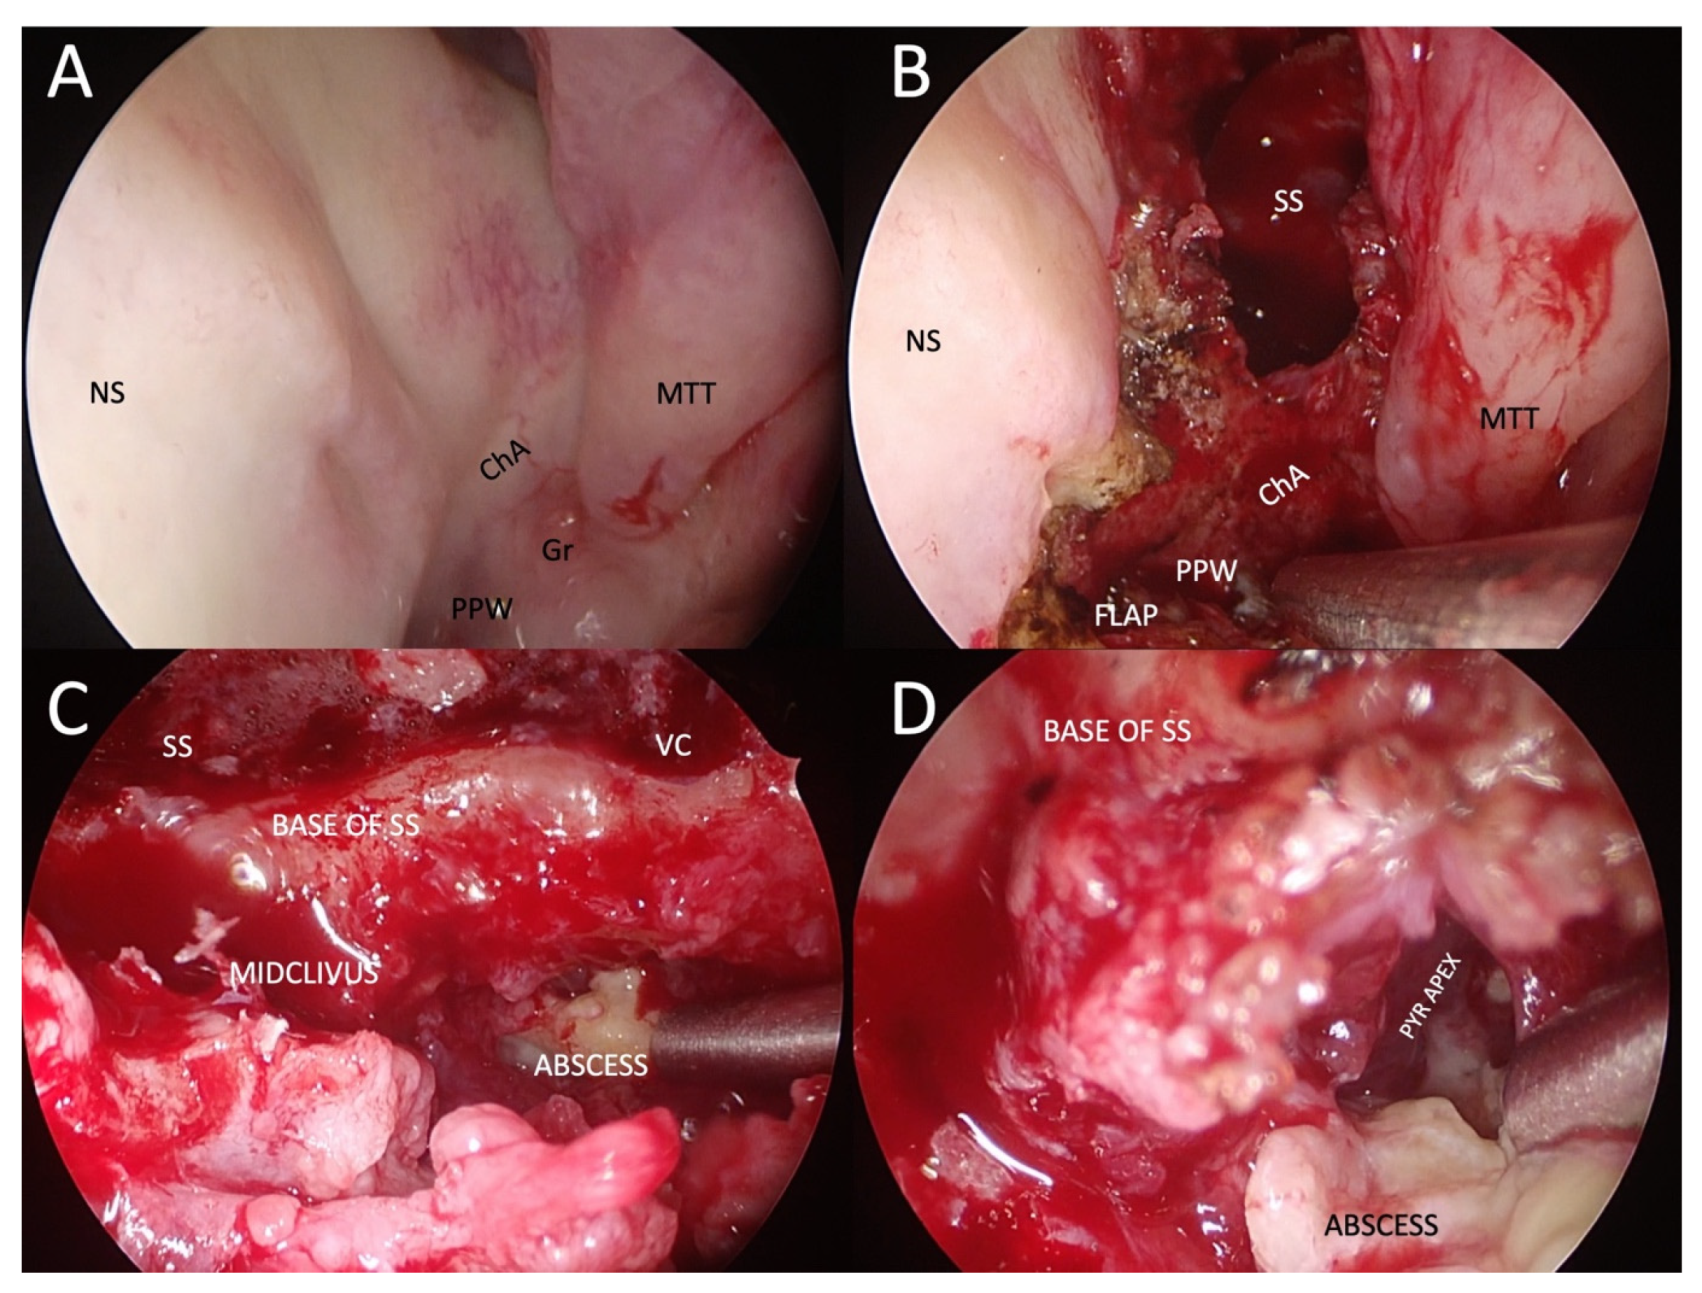 malignant otitis externa granulation tissue